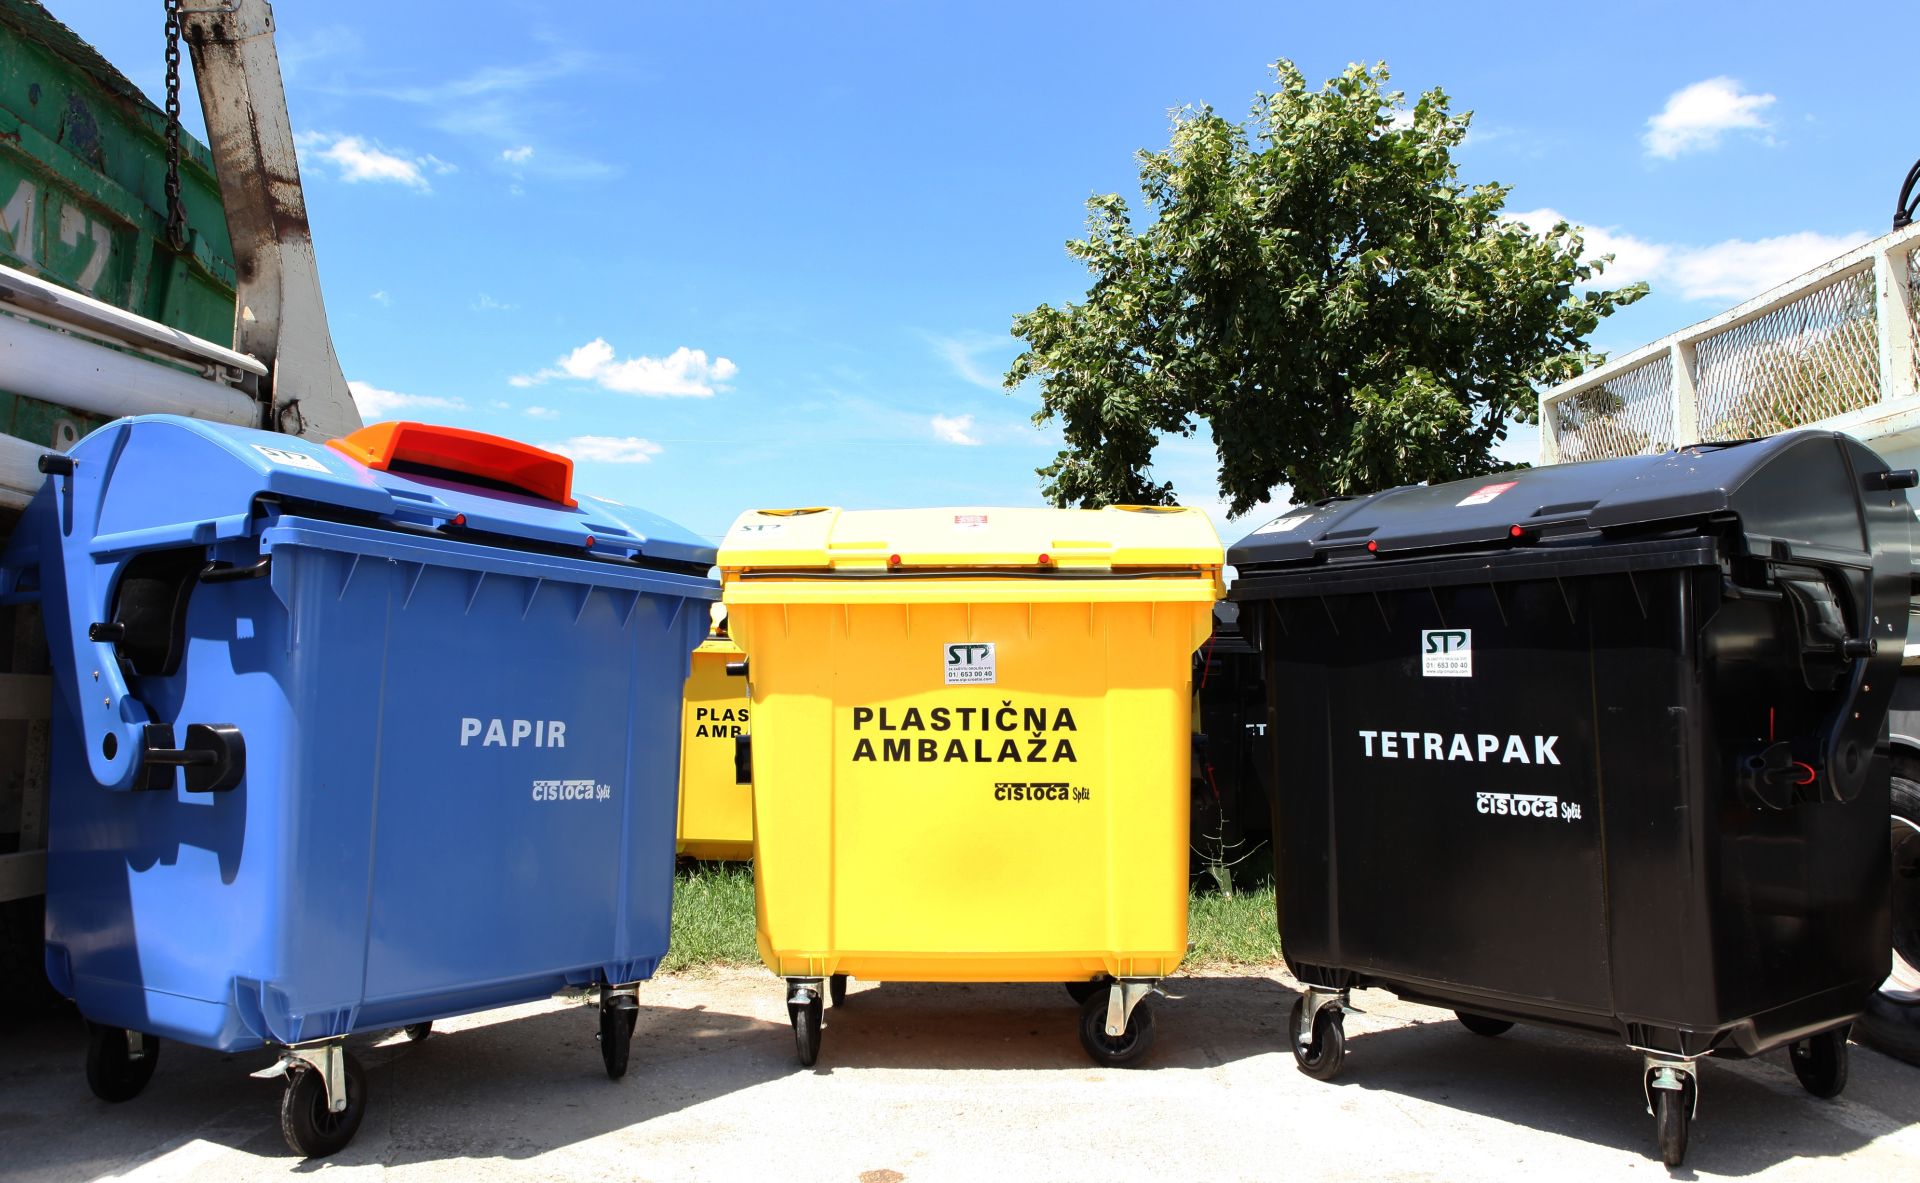 23.062015., Split, Kod Karepovca - Vozni park i kontejneri za odlaganje otpada komunalne tvrtke Cistoca d.o.o.
Photo: Miranda Cikotic/PIXSELL